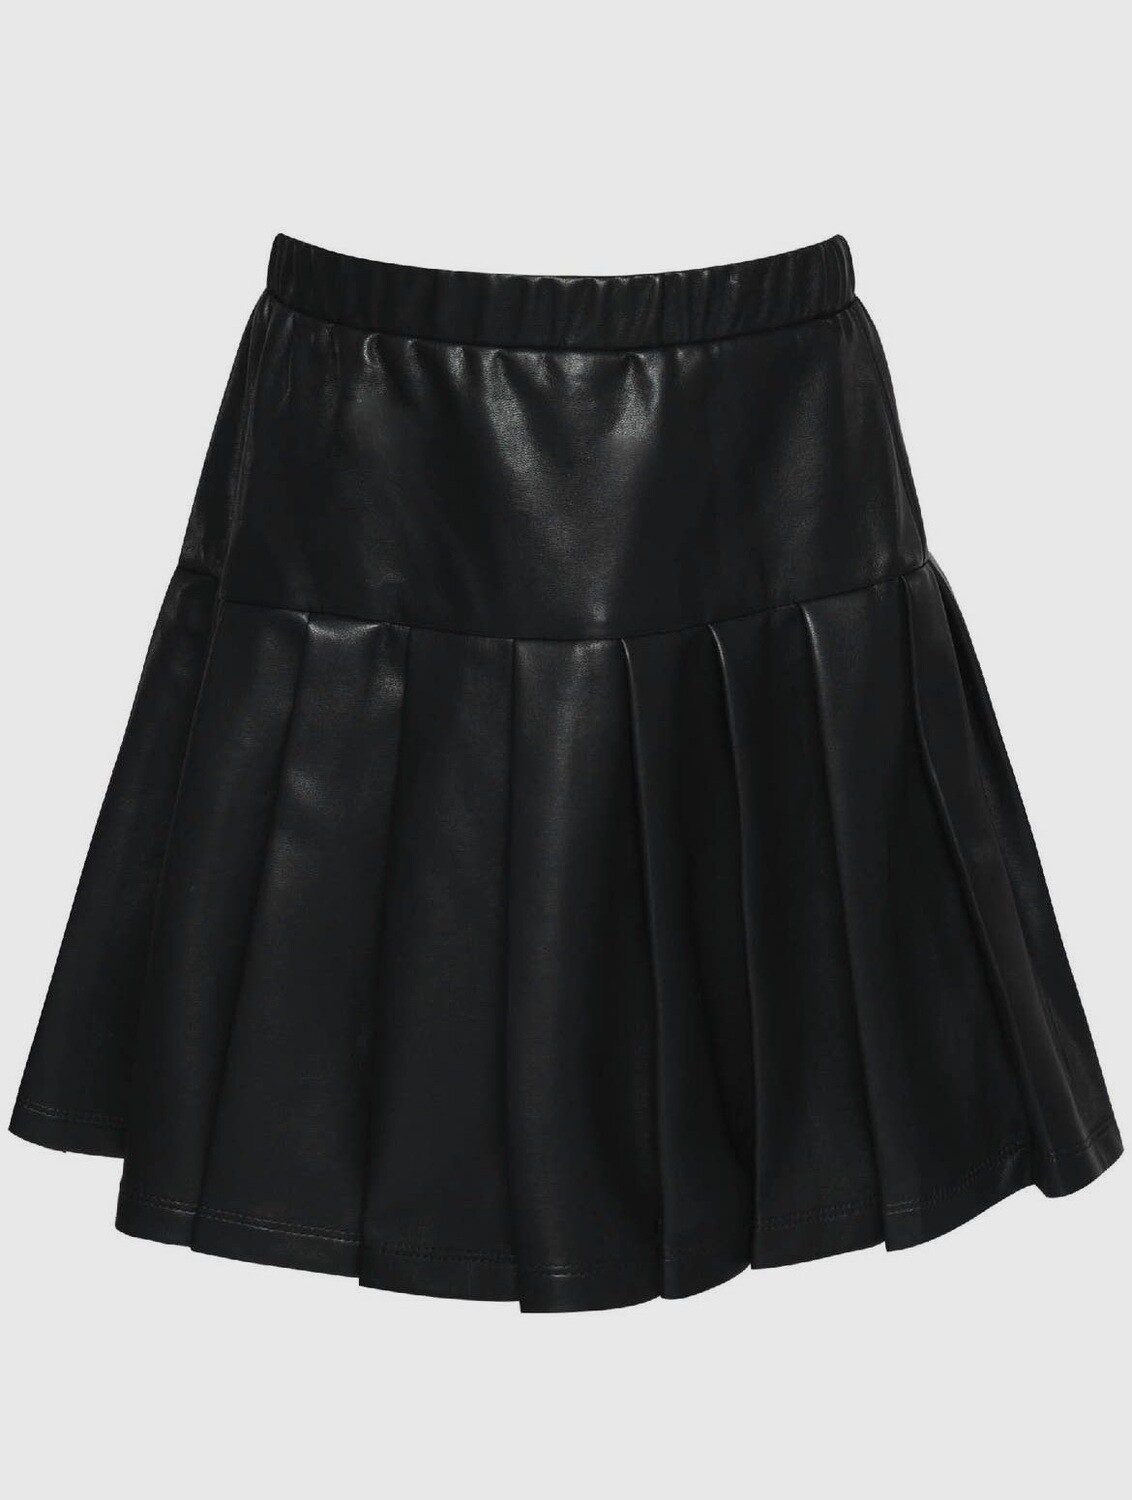 Hannah Banana Girls Black Faux Leather Skirt 134*